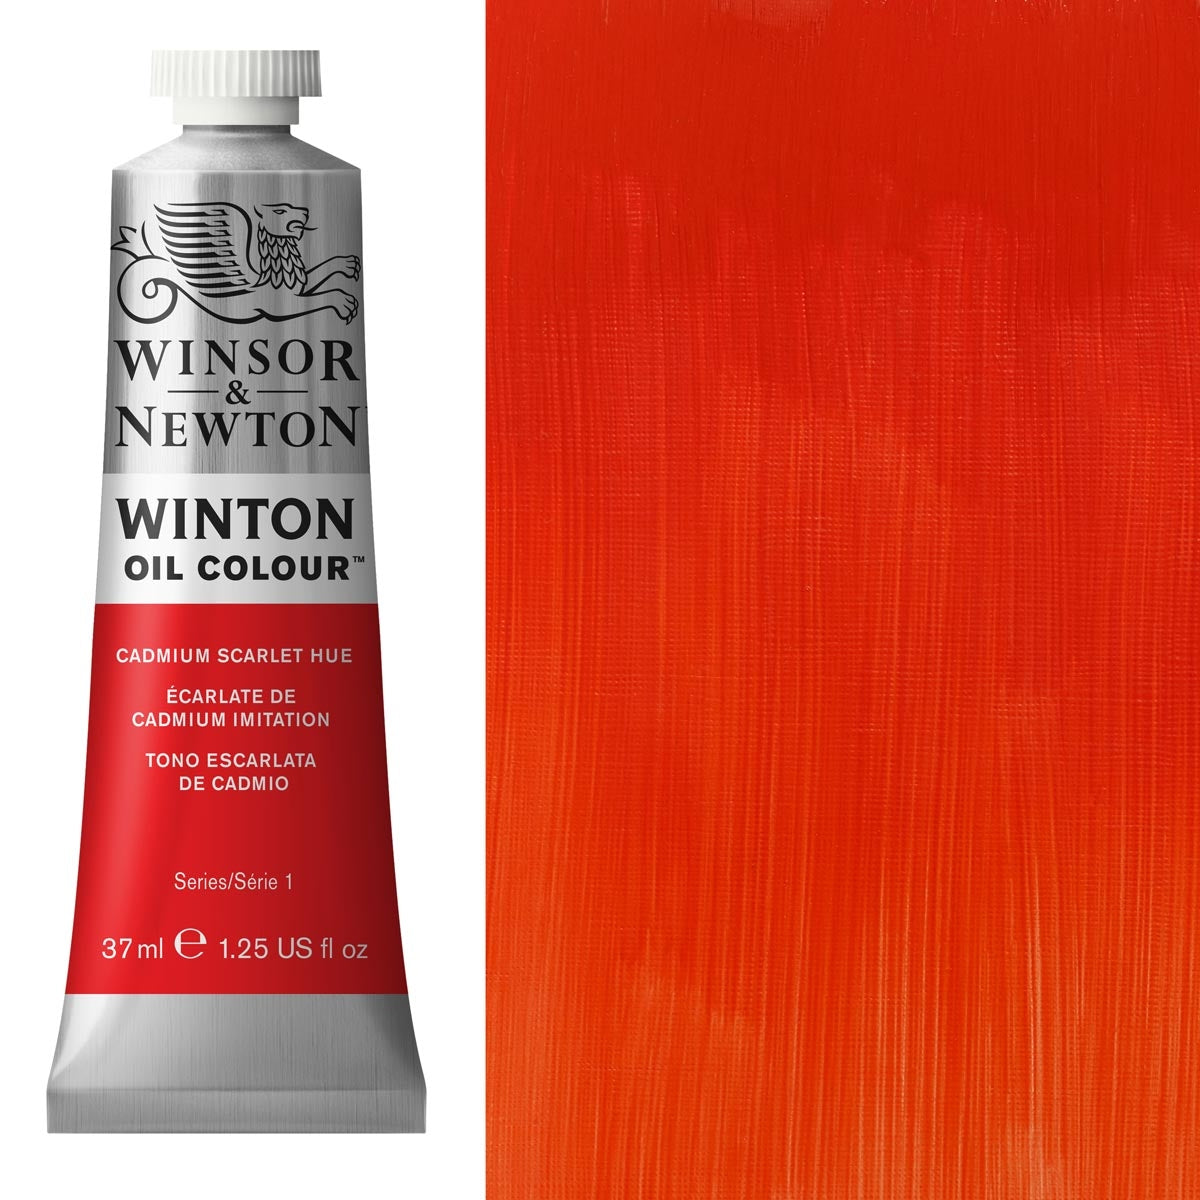 Winsor and Newton - Winton Oil Colour - 37ml - Cad Scarlet Hue